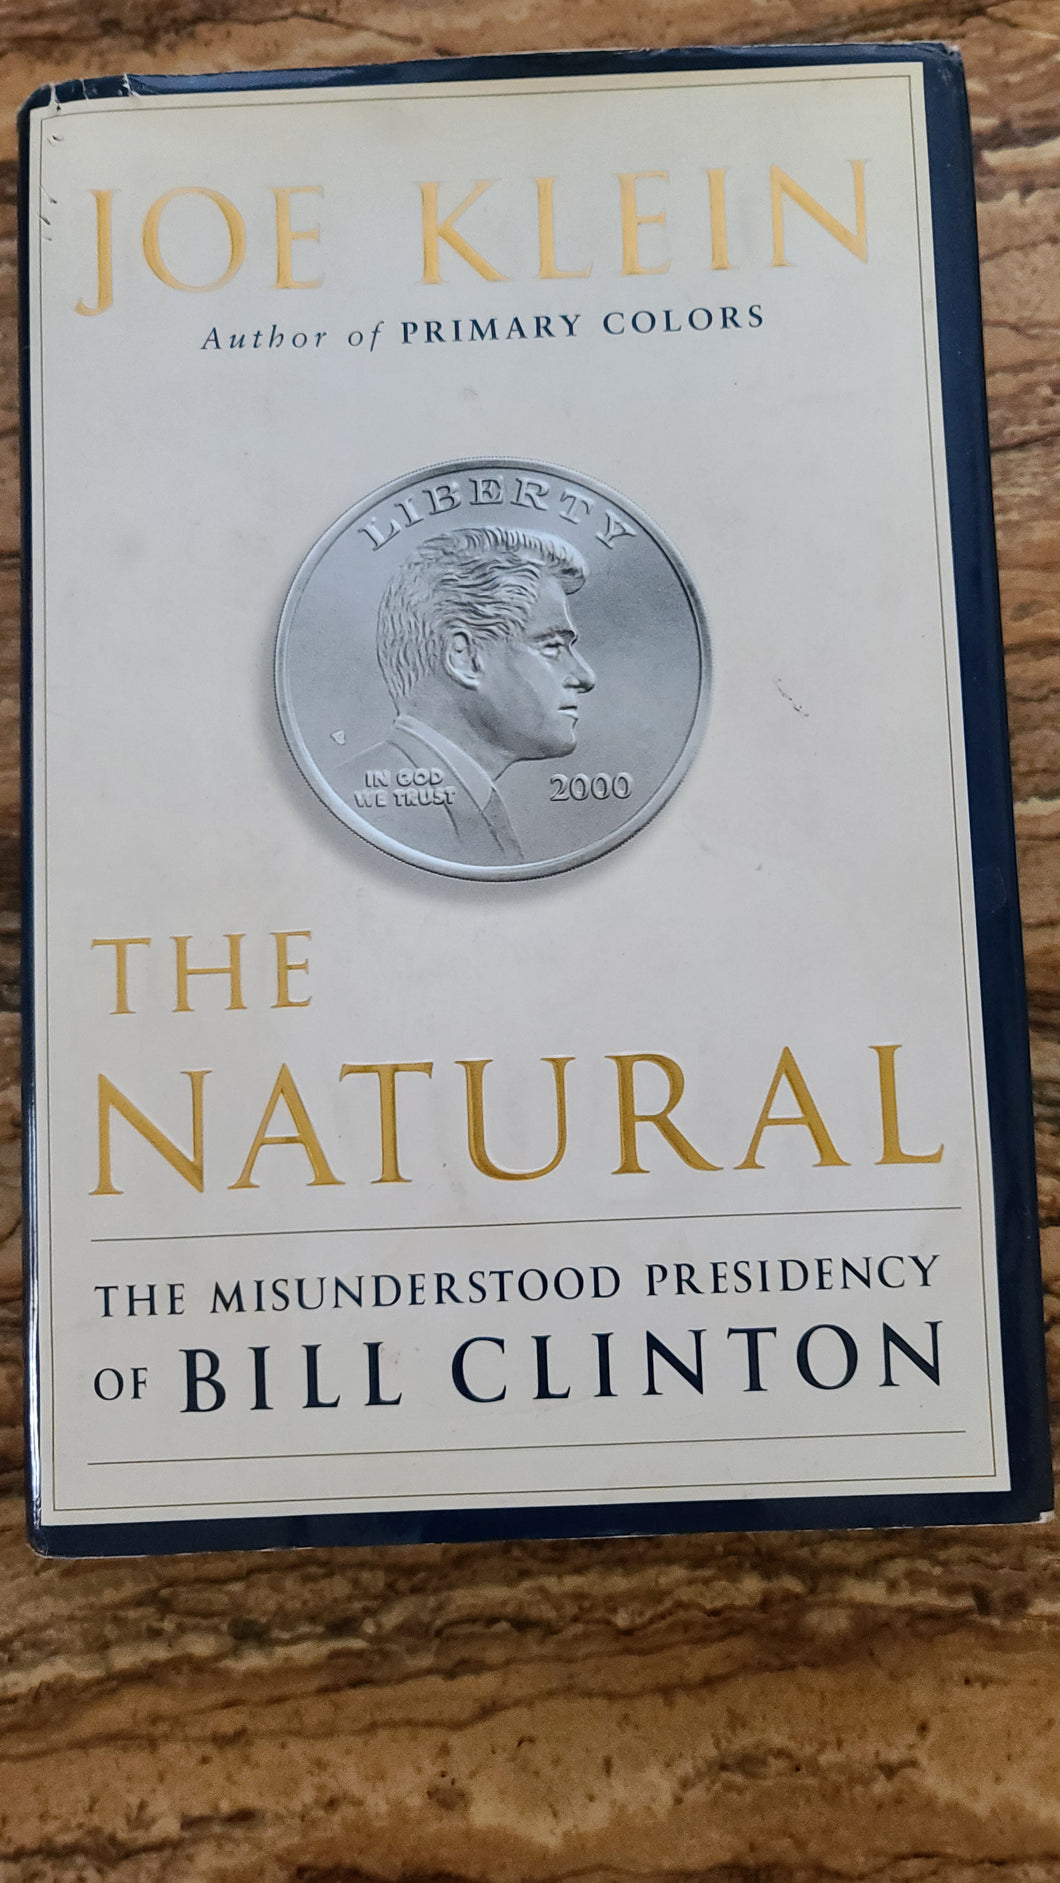 The Natural, The Misunterstood Presidency of Bill Clinton